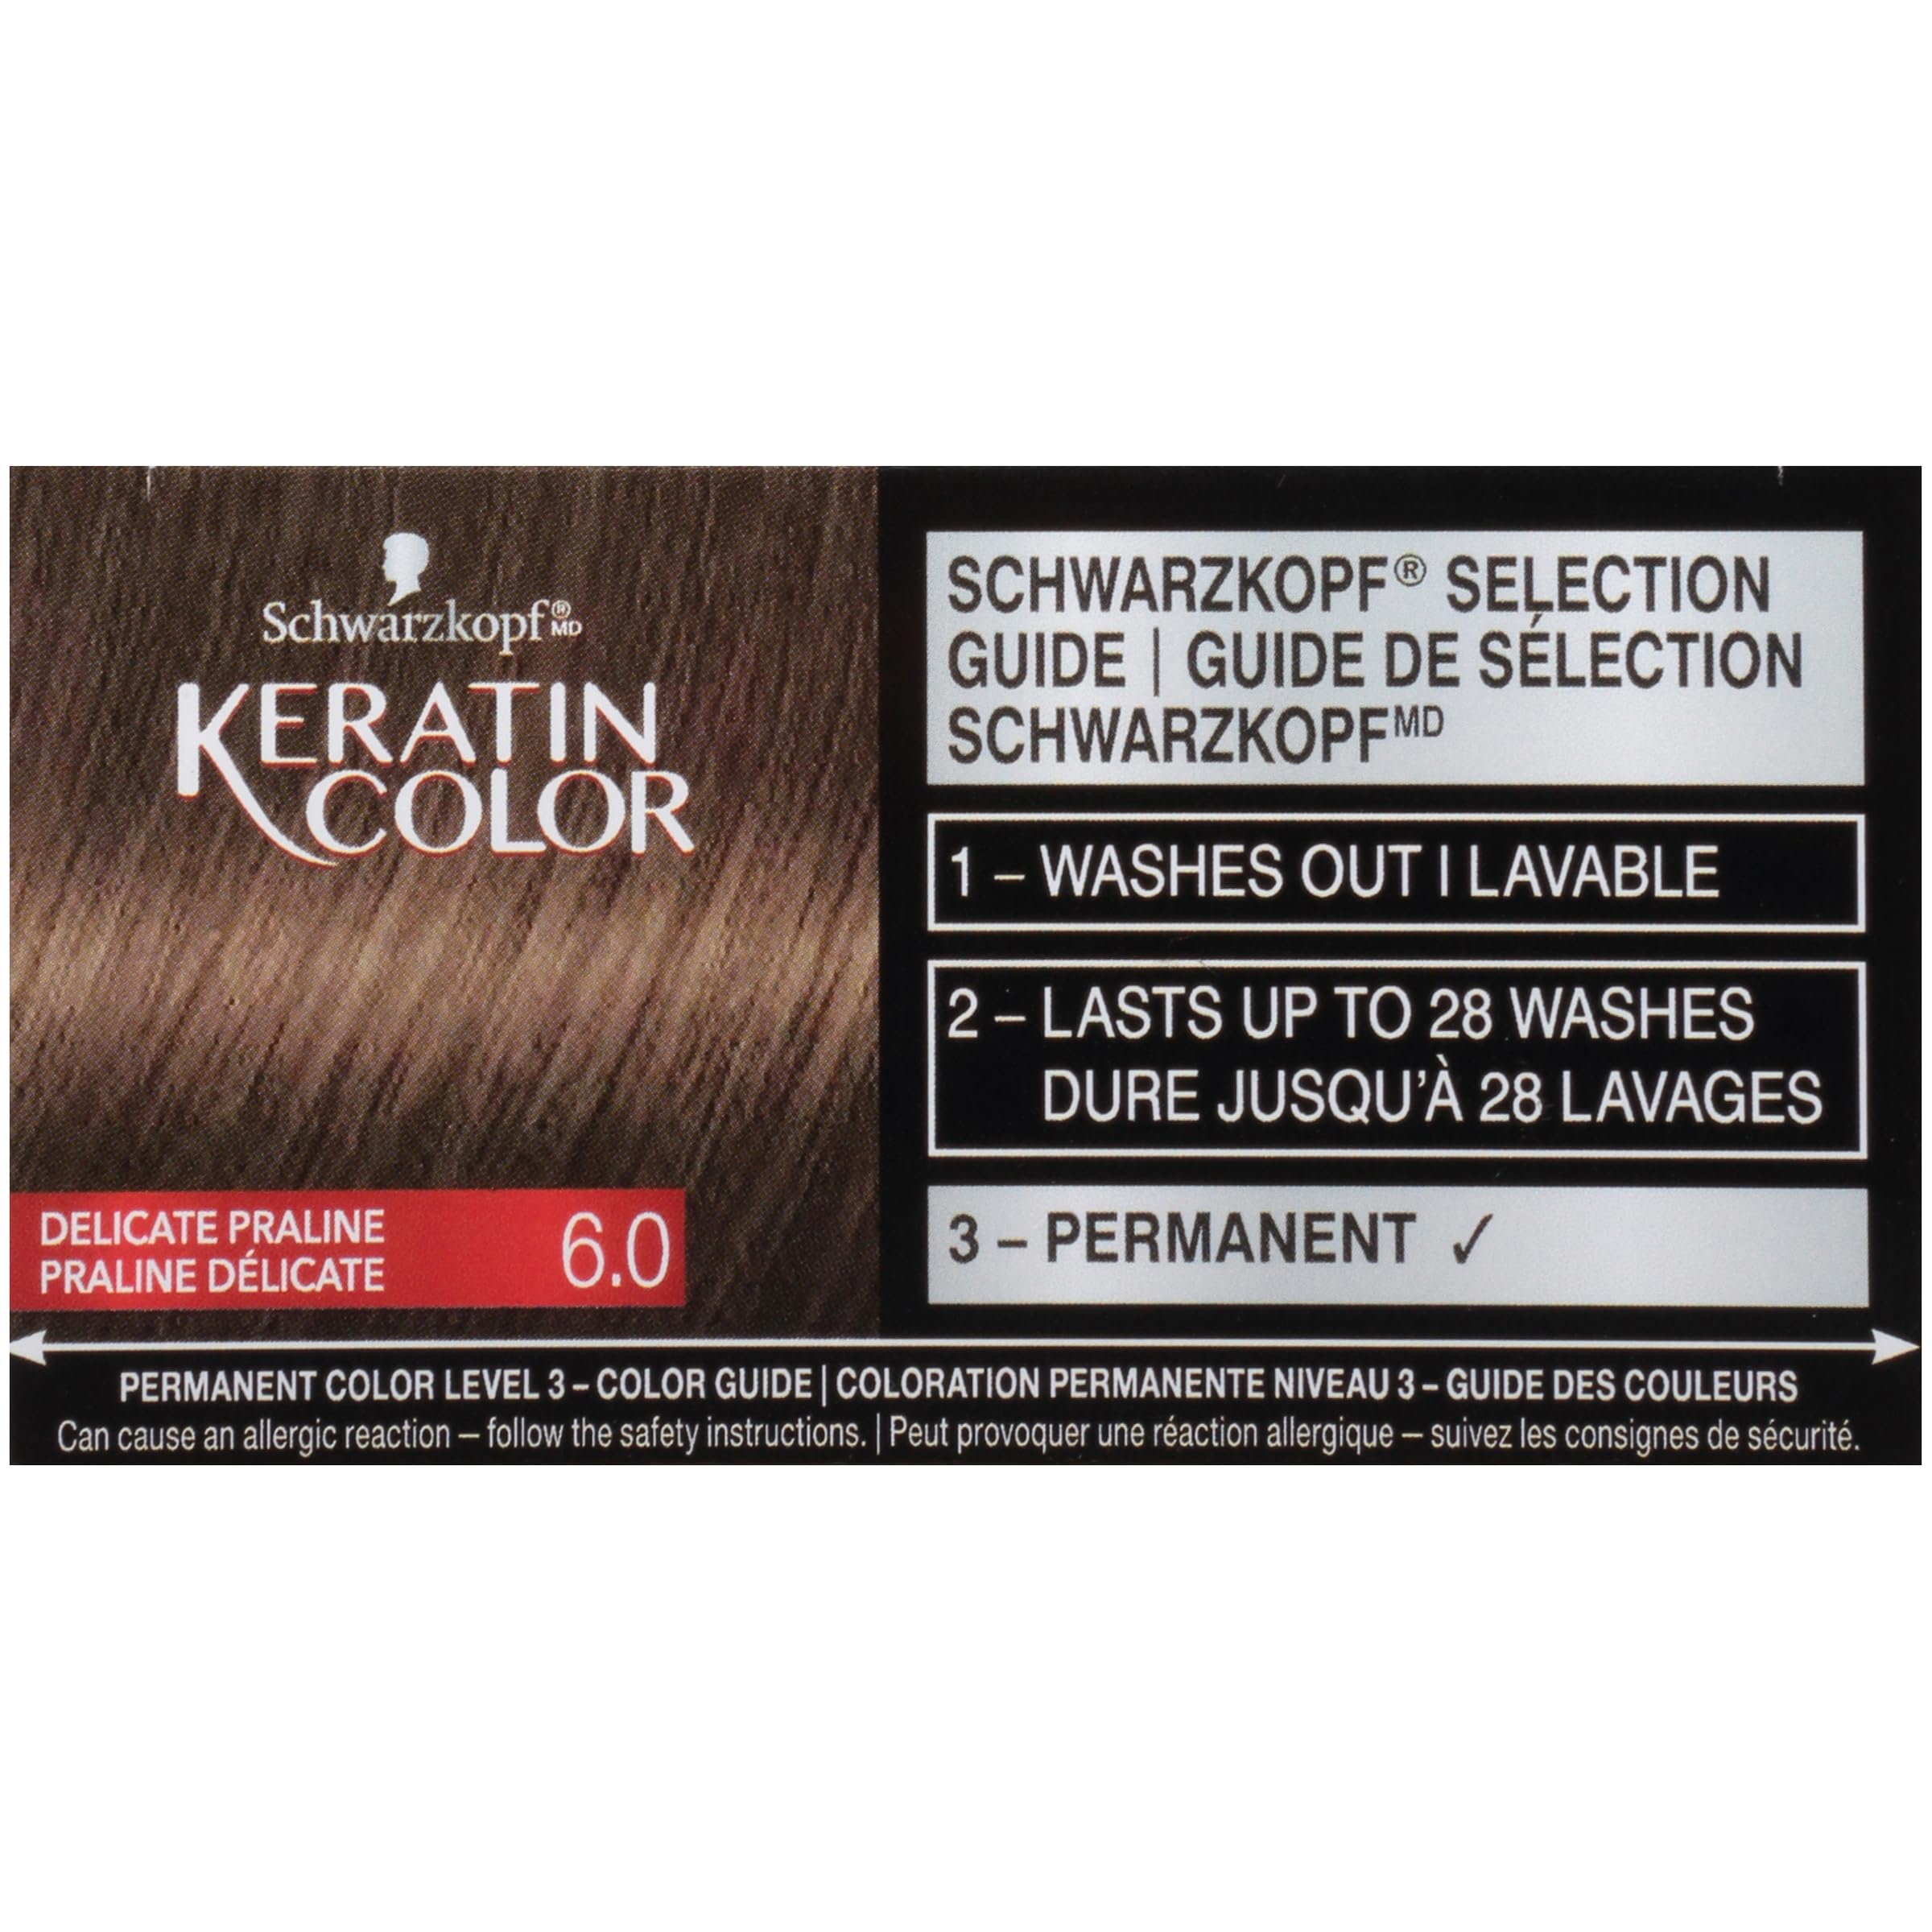 Schwarzkopf Keratin Color Permanent Hair Color Cream, 6.0 Delicate Praline